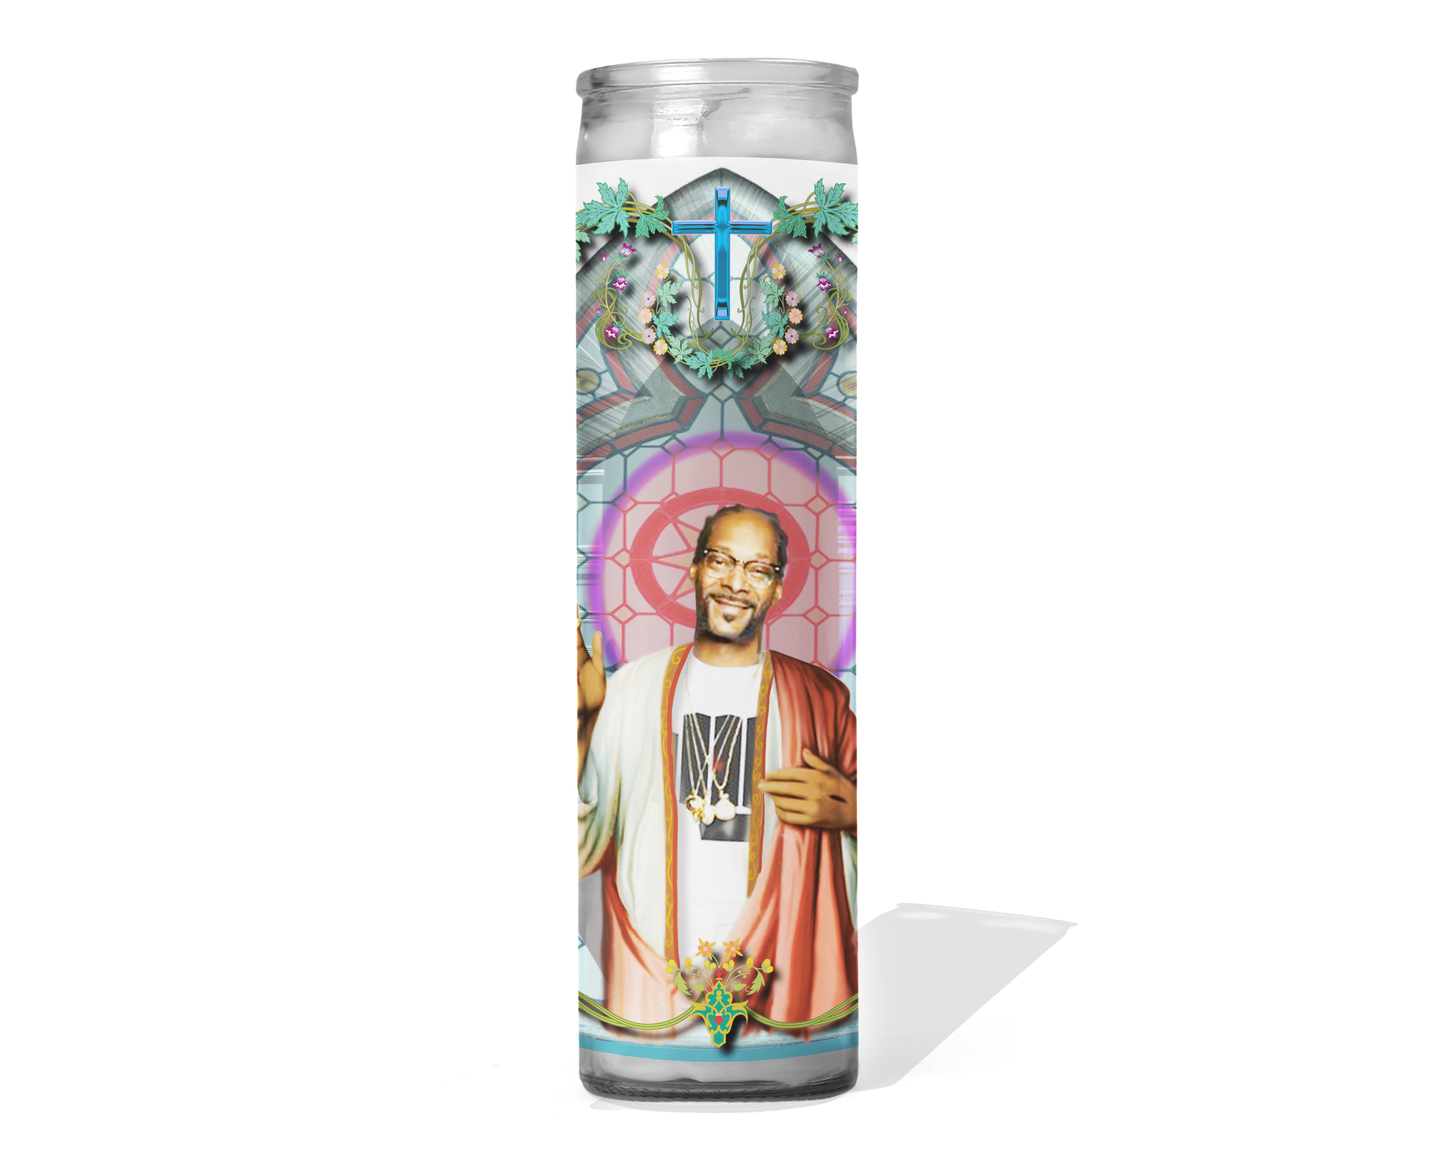 Snoop Dog Celebrity Prayer Candle